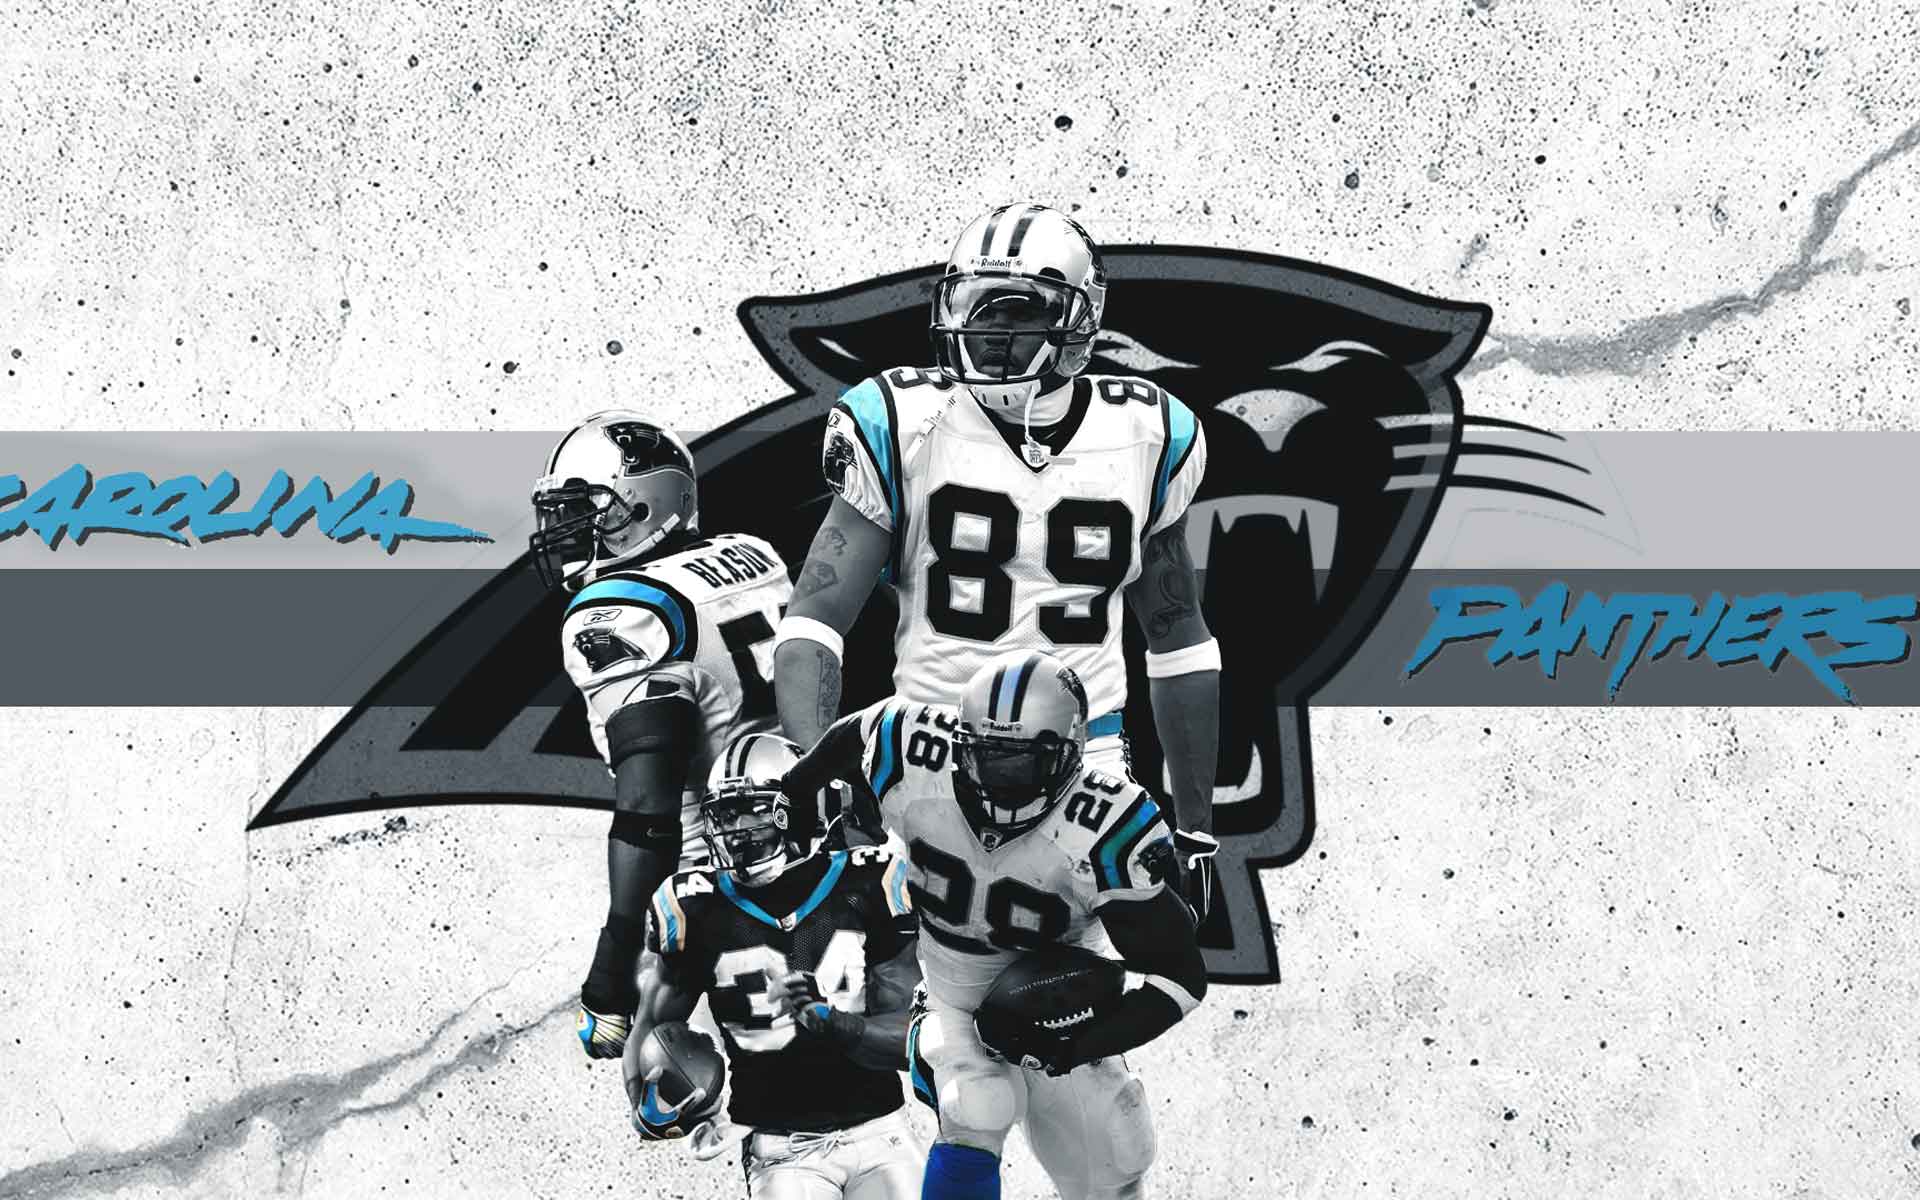 Carolina Panthers Team NFL wallpaper 2018 in Football